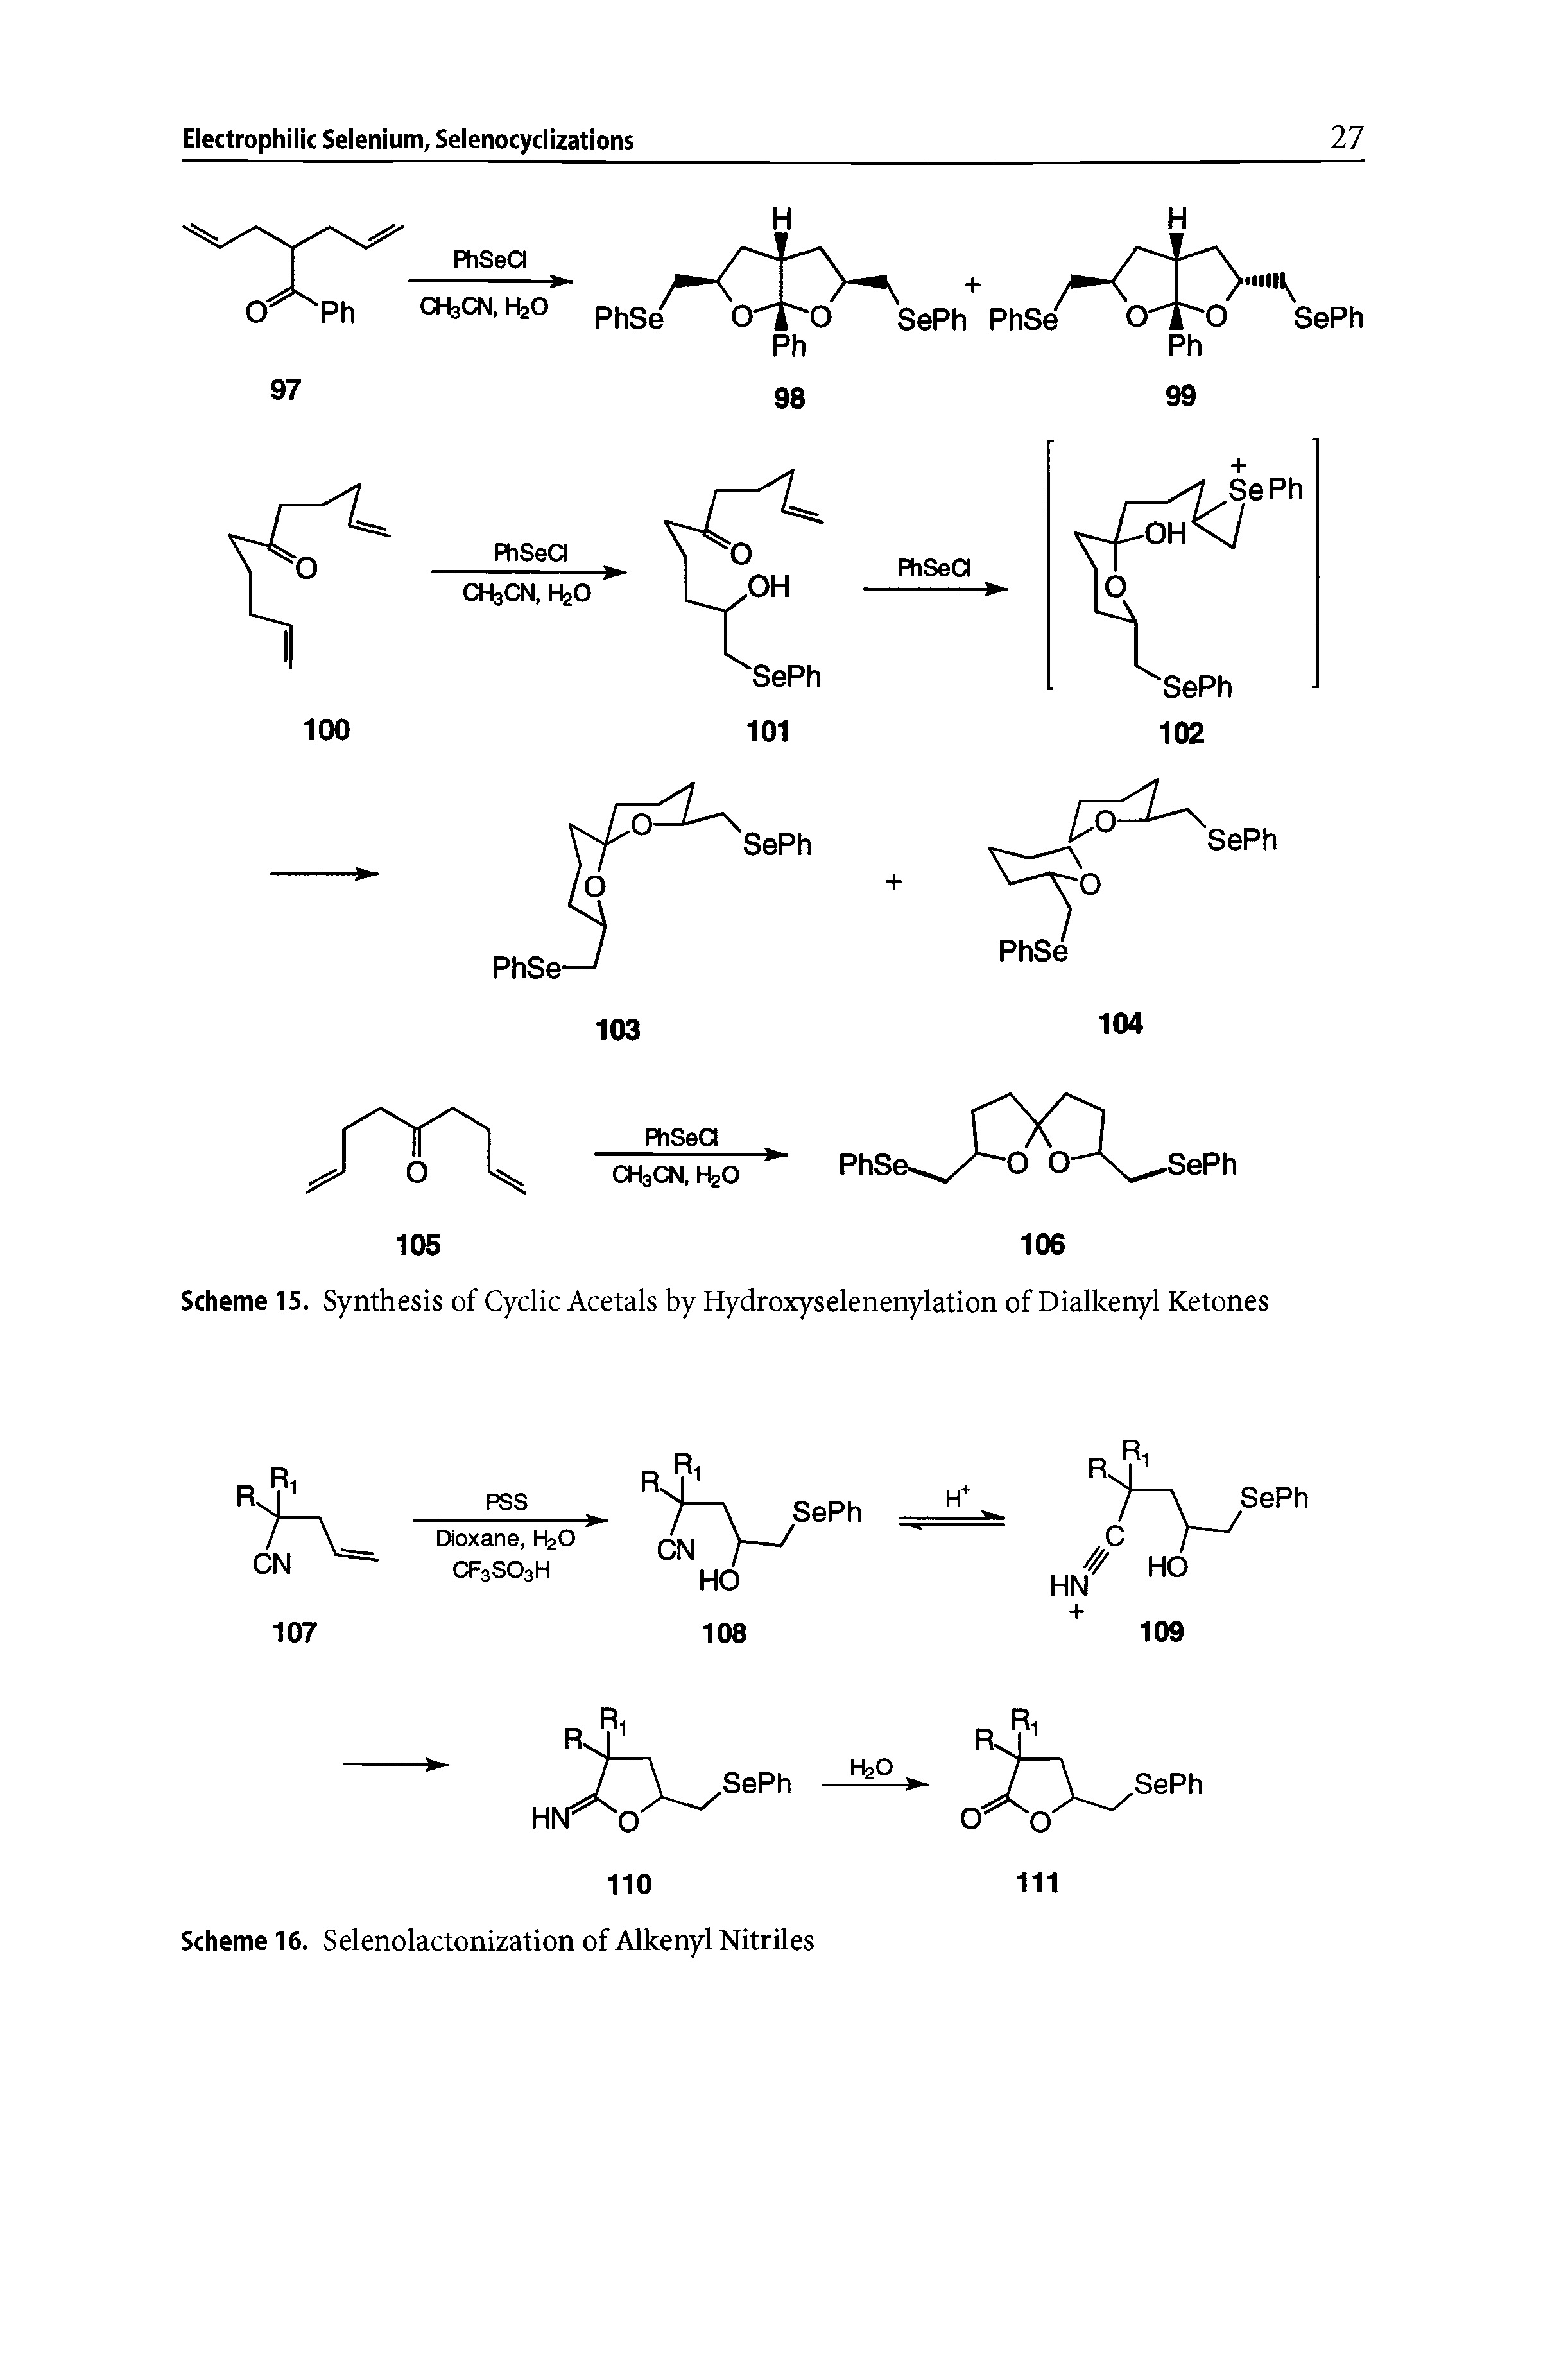 Scheme 15. Synthesis of Cyclic Acetals by Hydroxyselenenylation of Dialkenyl Ketones...